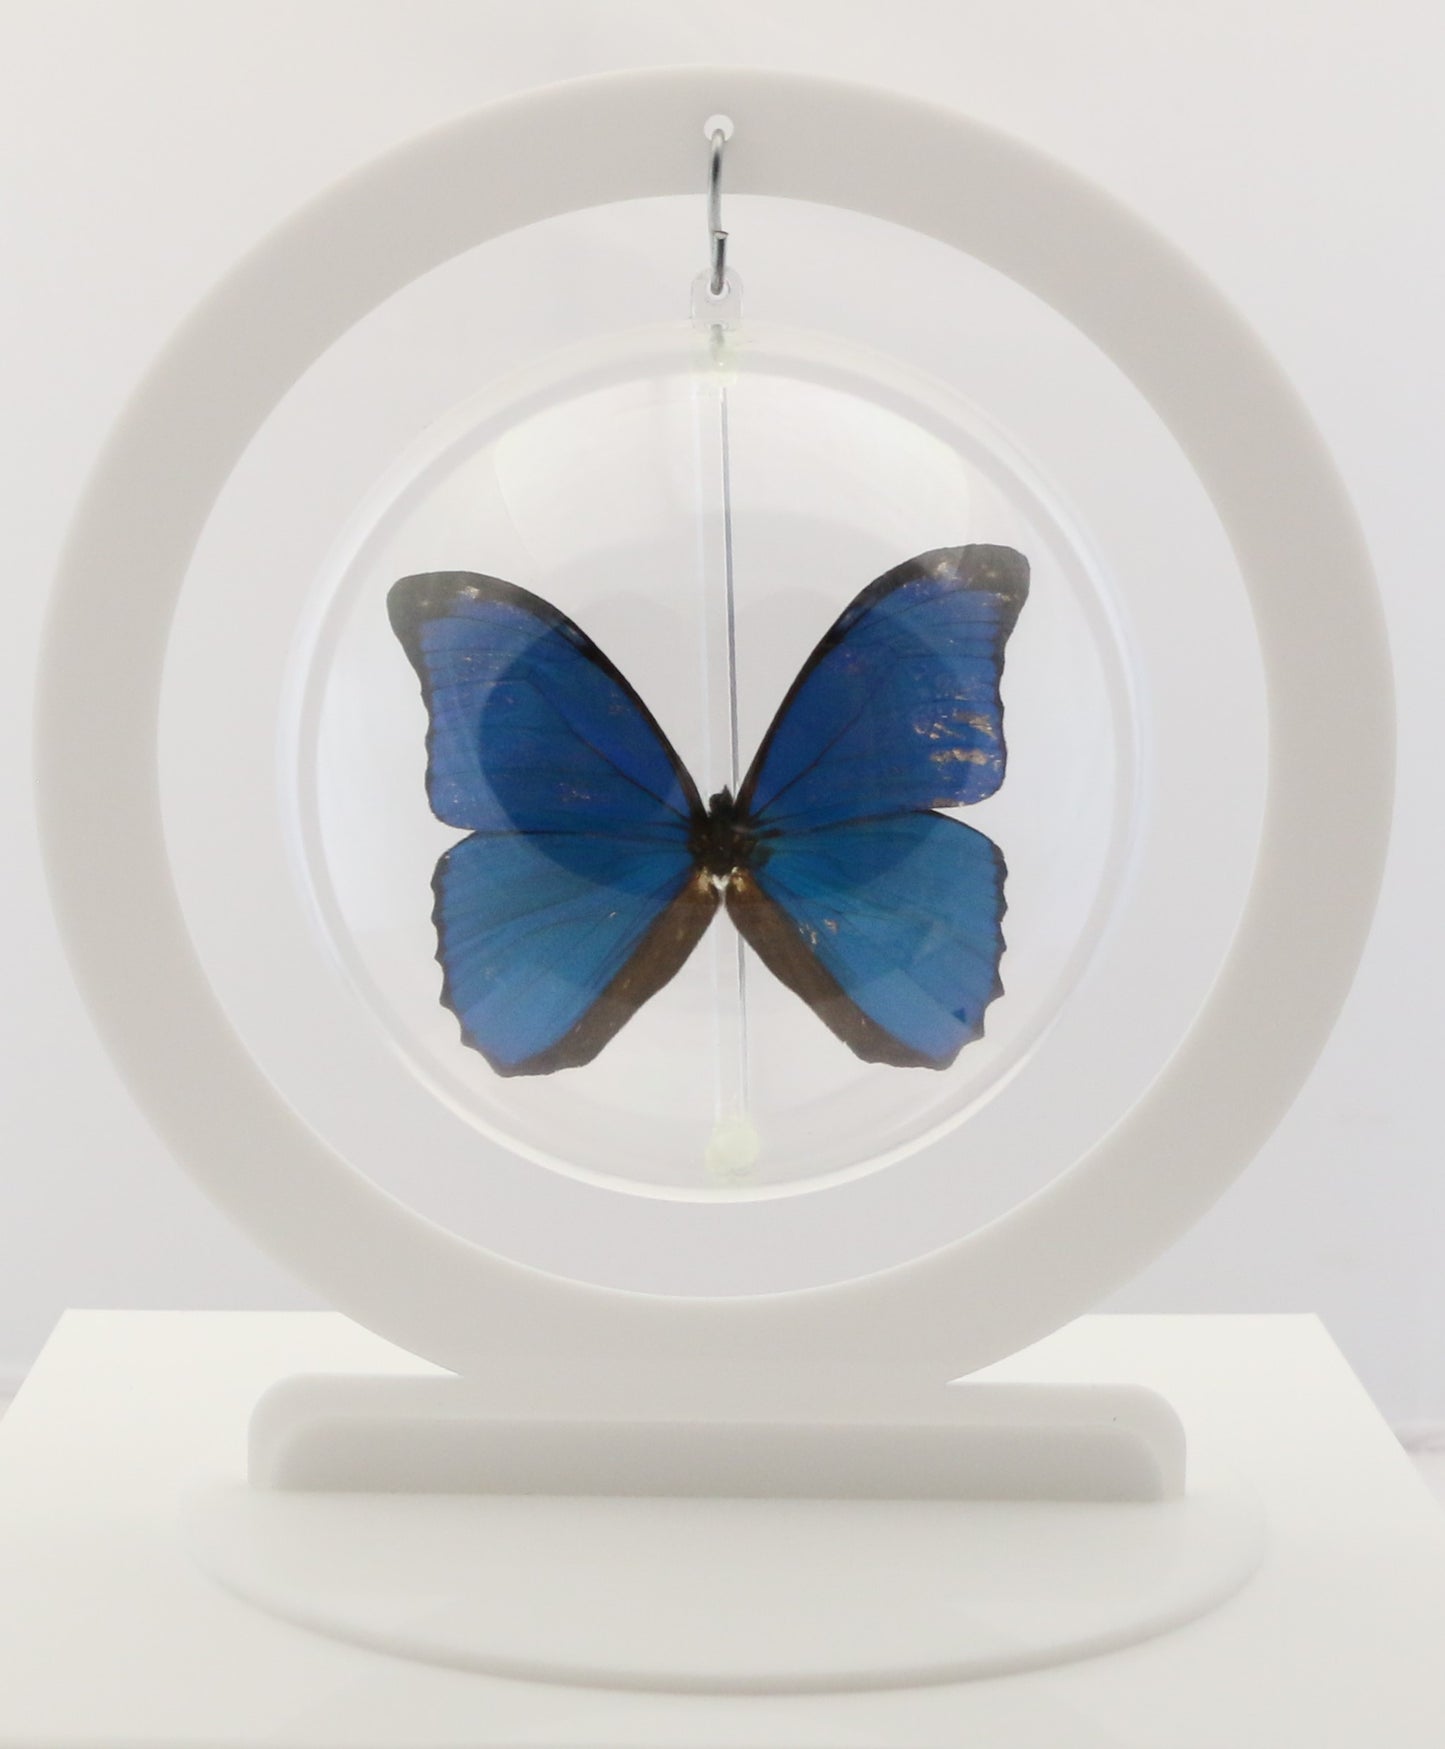 750300 - Butterfly Bubbles - Lg. - Round - Blue Morpho ﻿(Morpho menelaus)